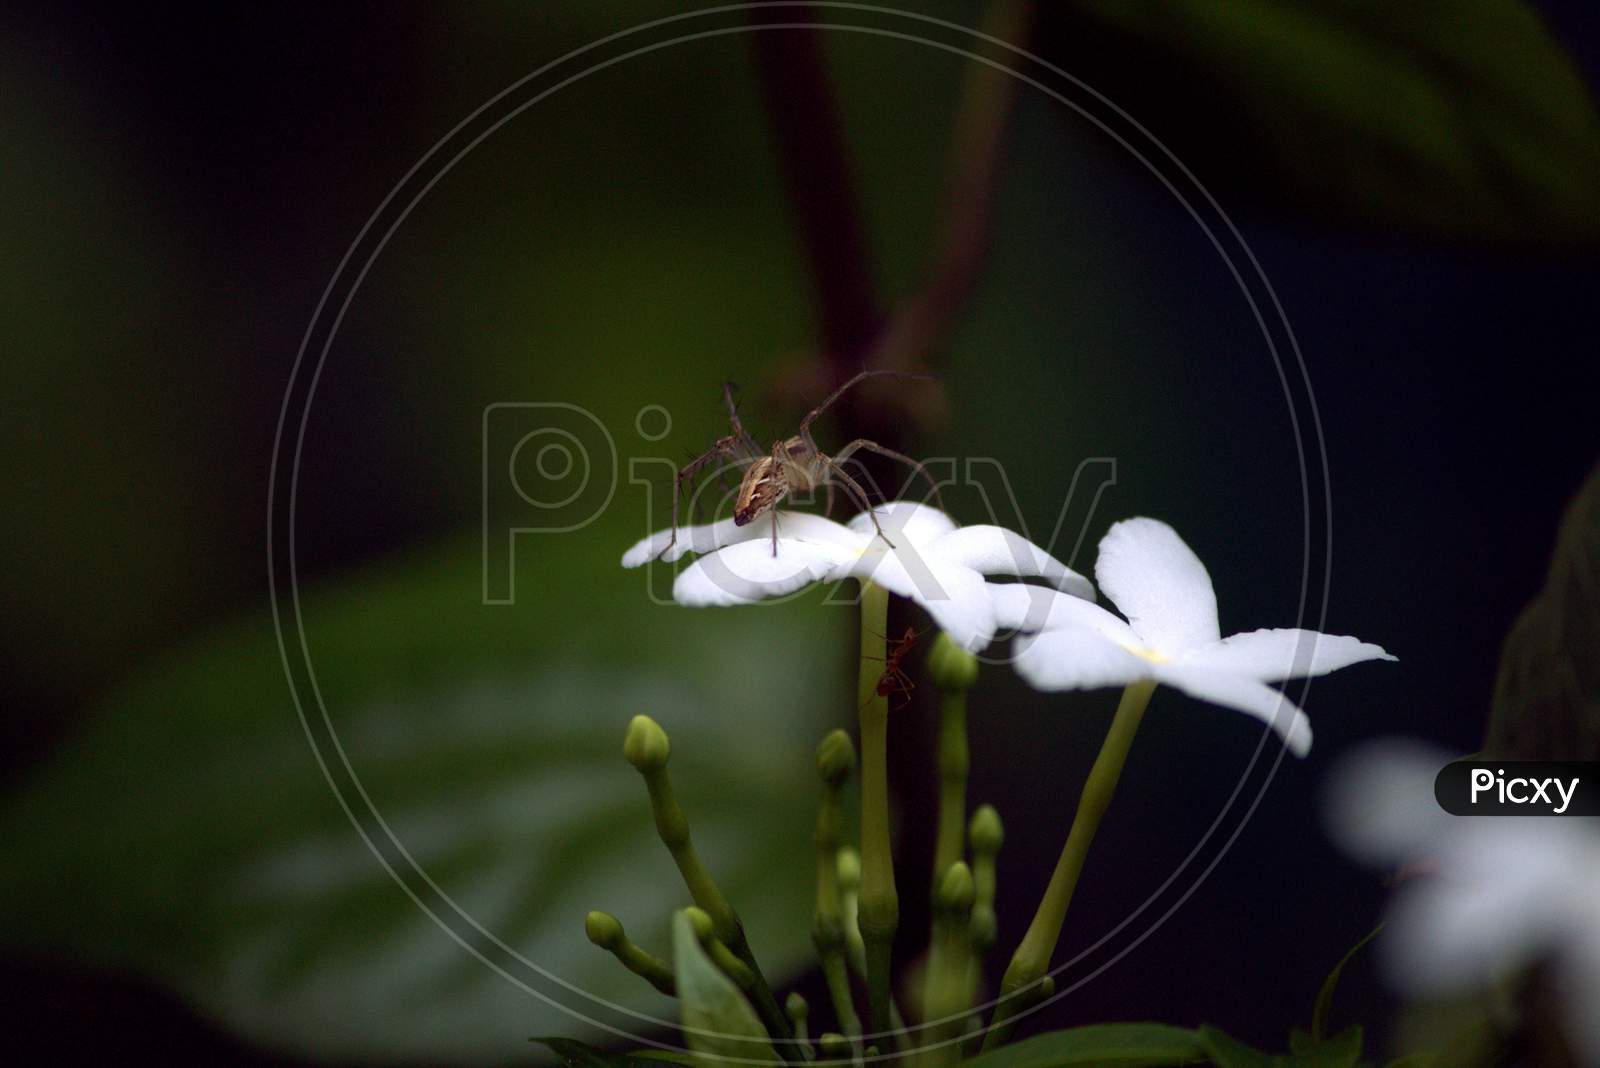 Spider in the flower